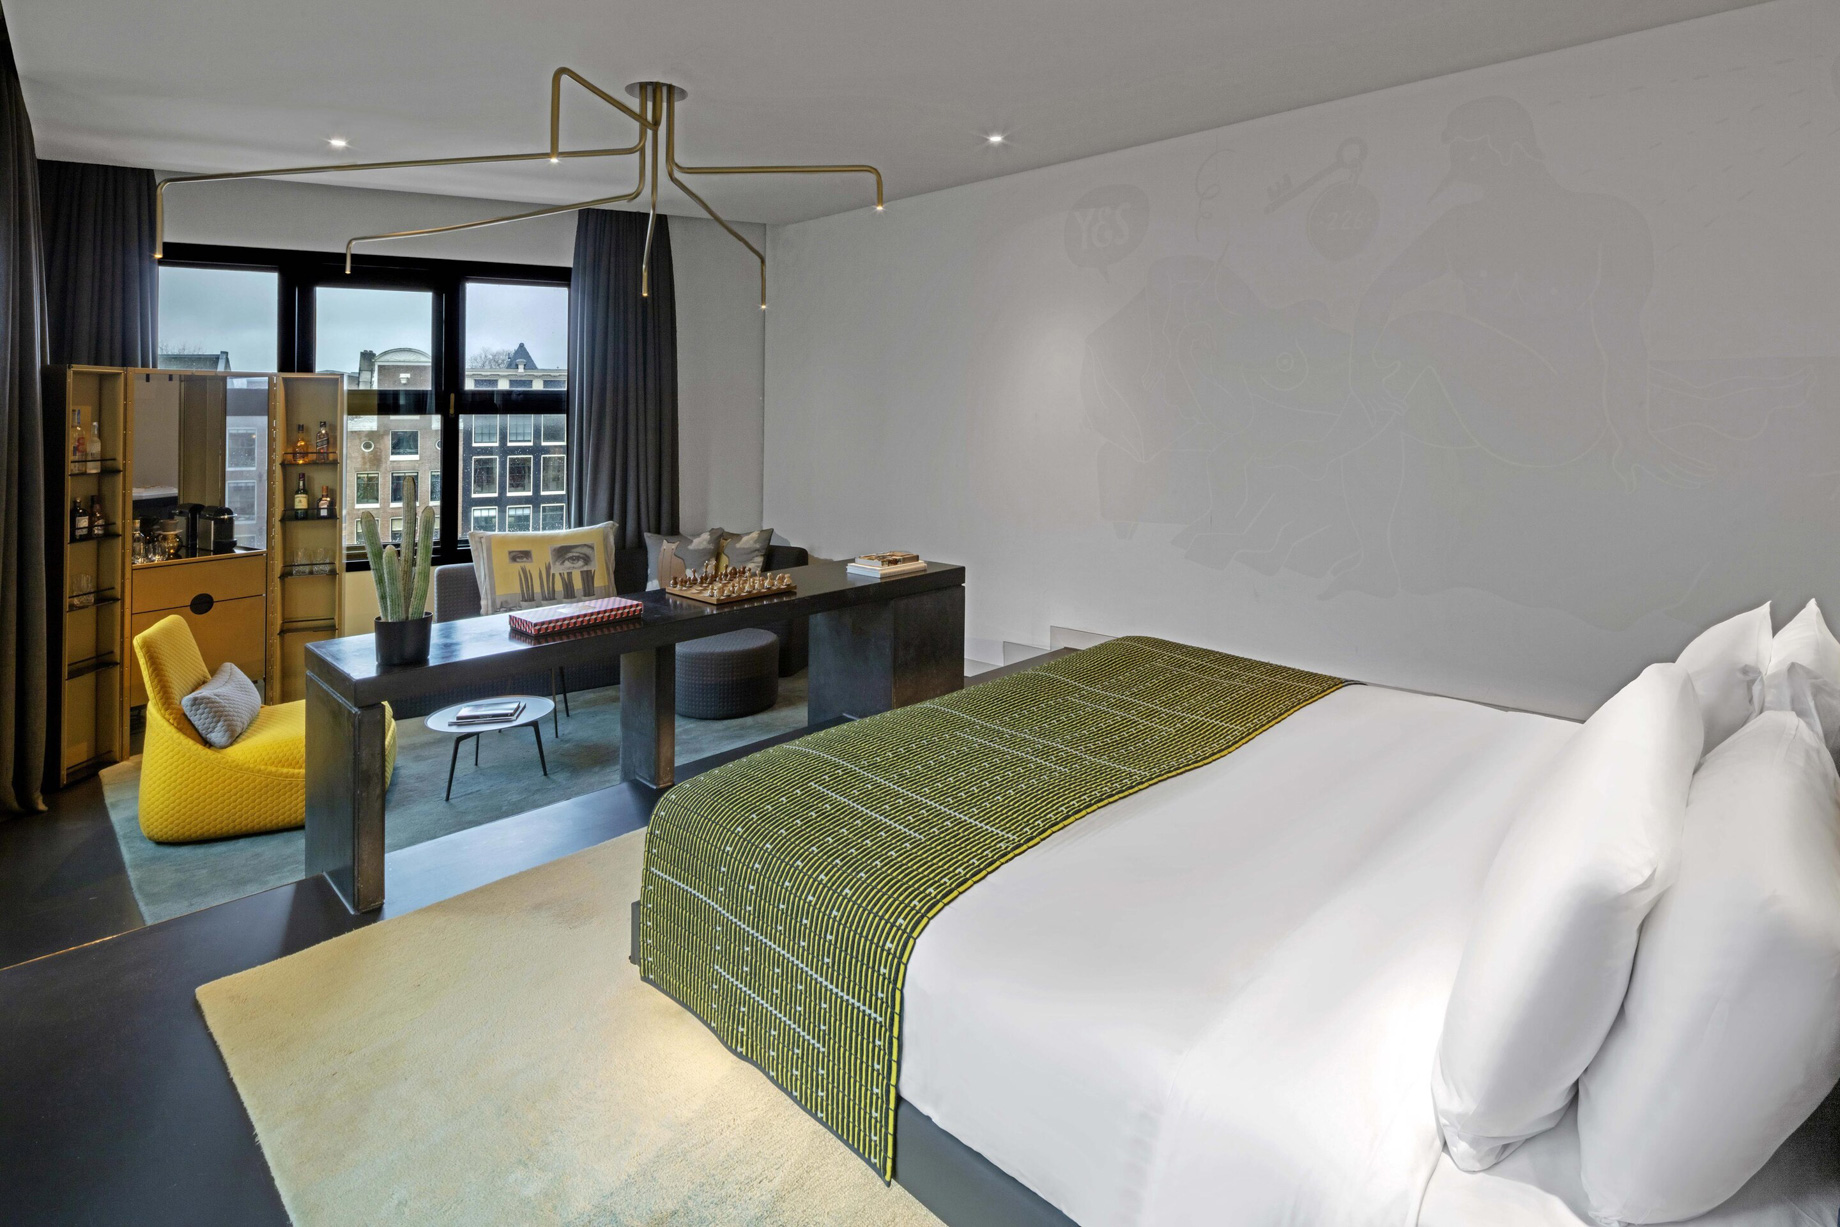 W Amsterdam Hotel – Amsterdam, Netherlands – Studio Bank Suite Bedroom